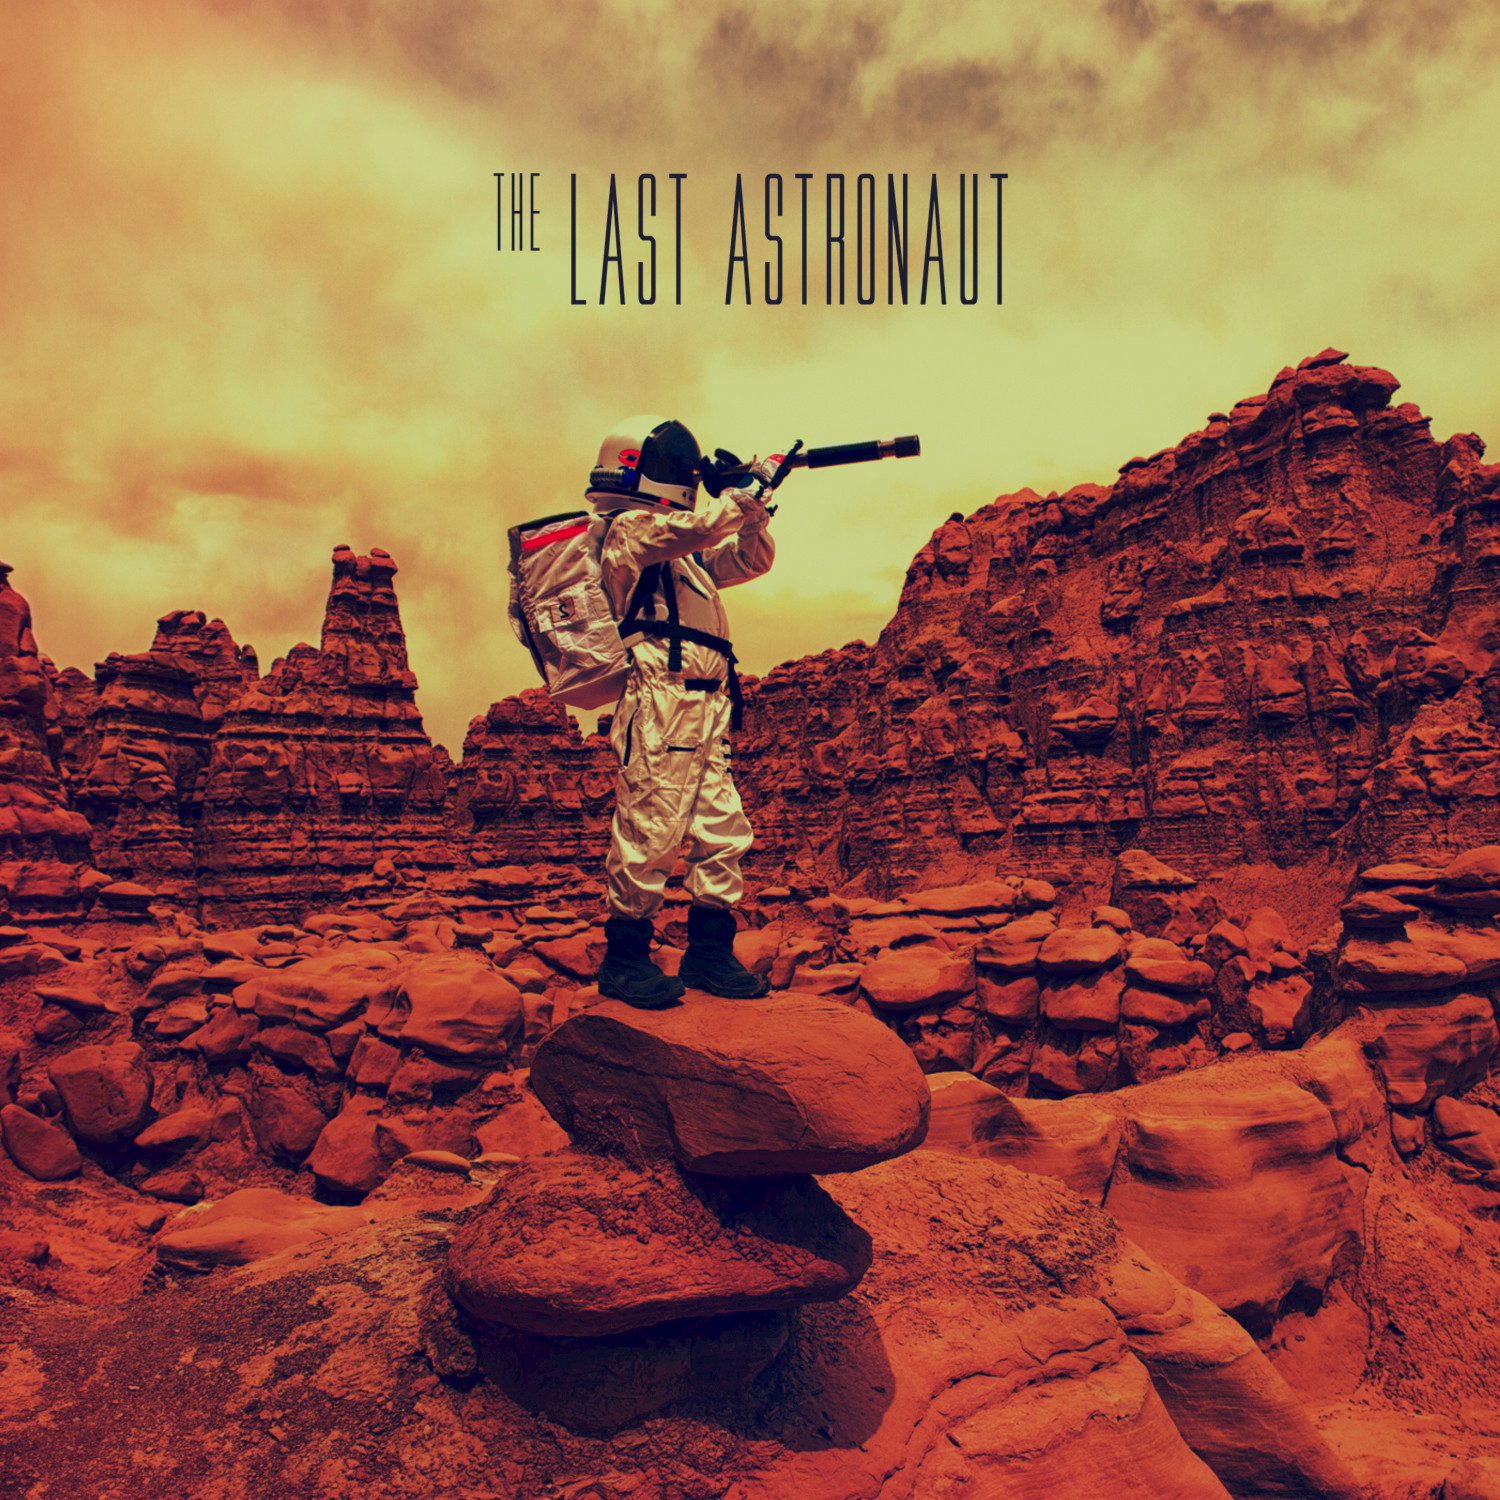 The Last Astronaut